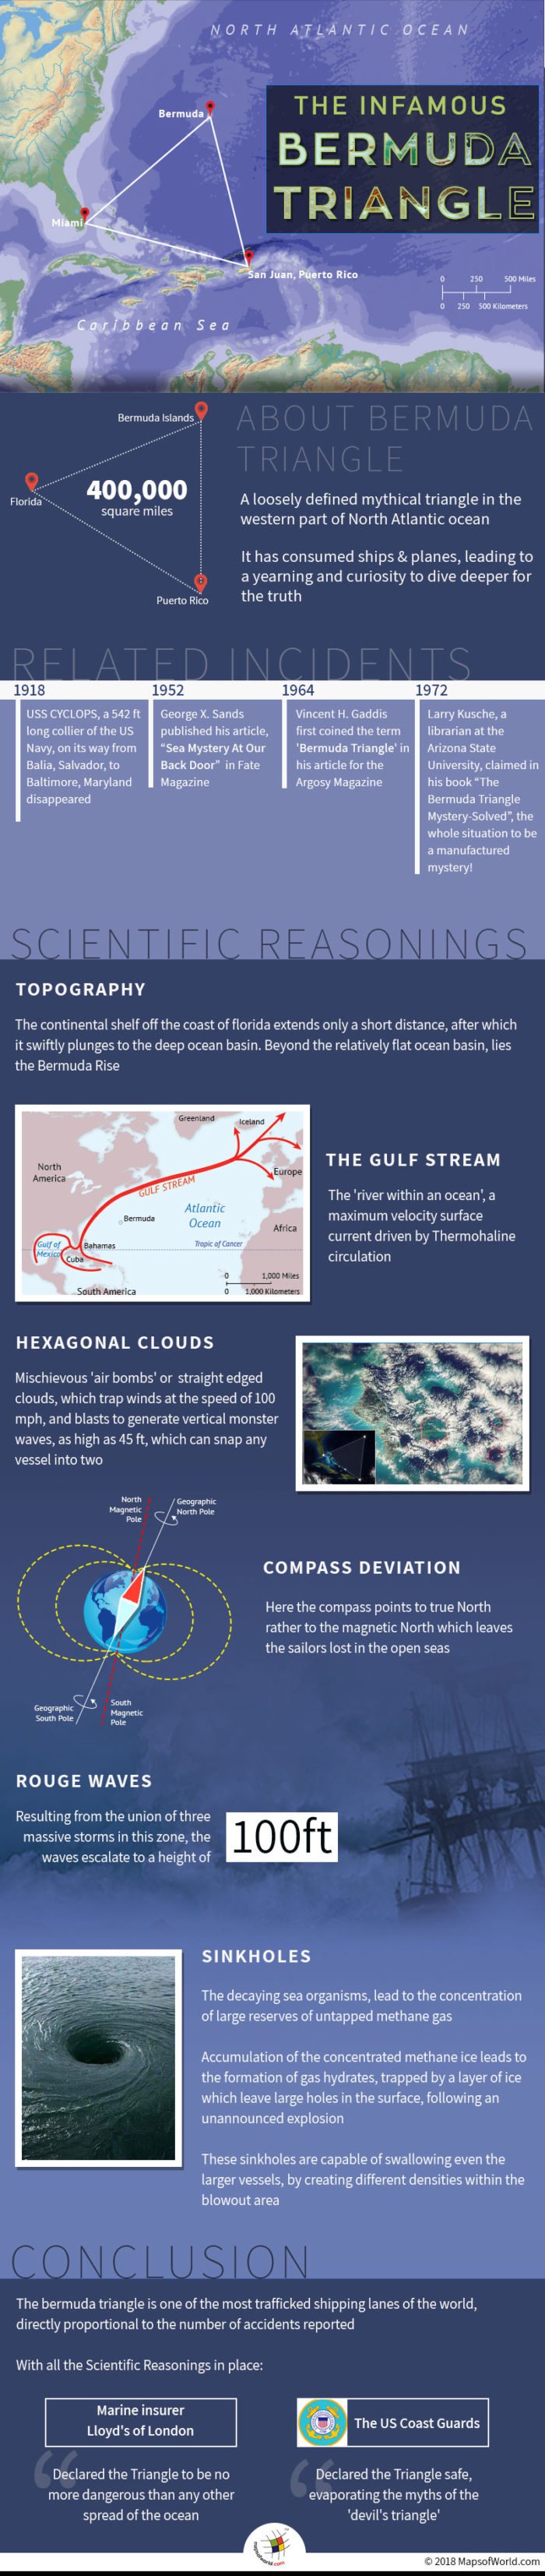 Infographic elaborating Bermuda Triangle